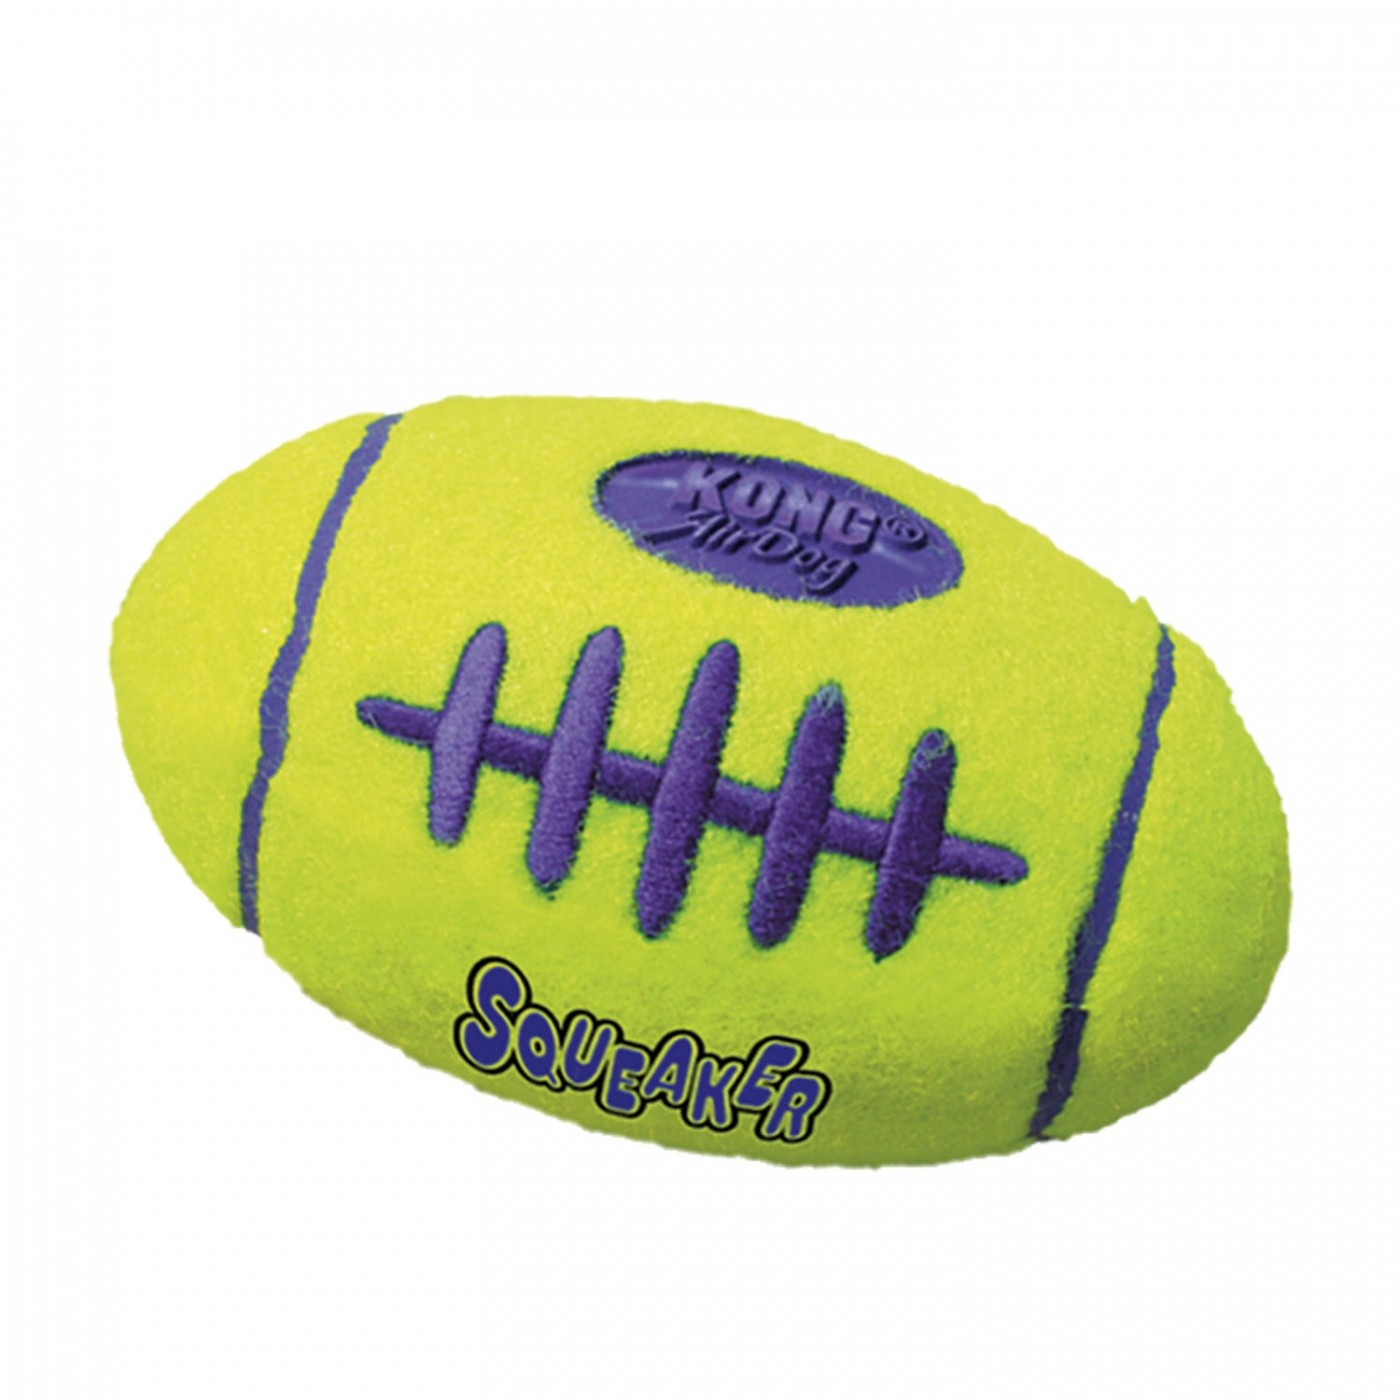 KONG Air Squeaker Football Hundespielzeug